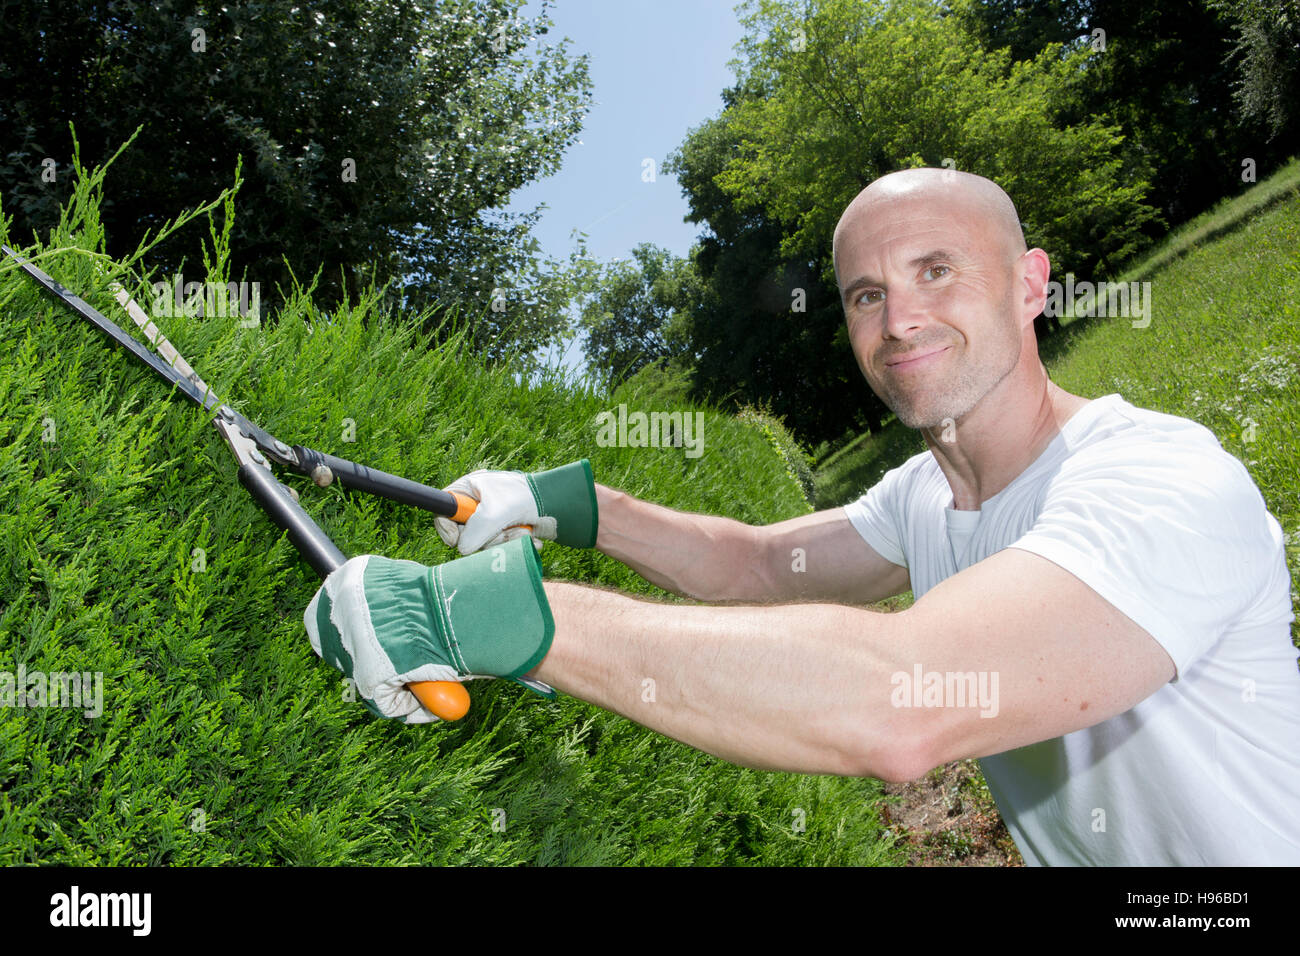 giant scissors cutting grass Stock Photo - Alamy